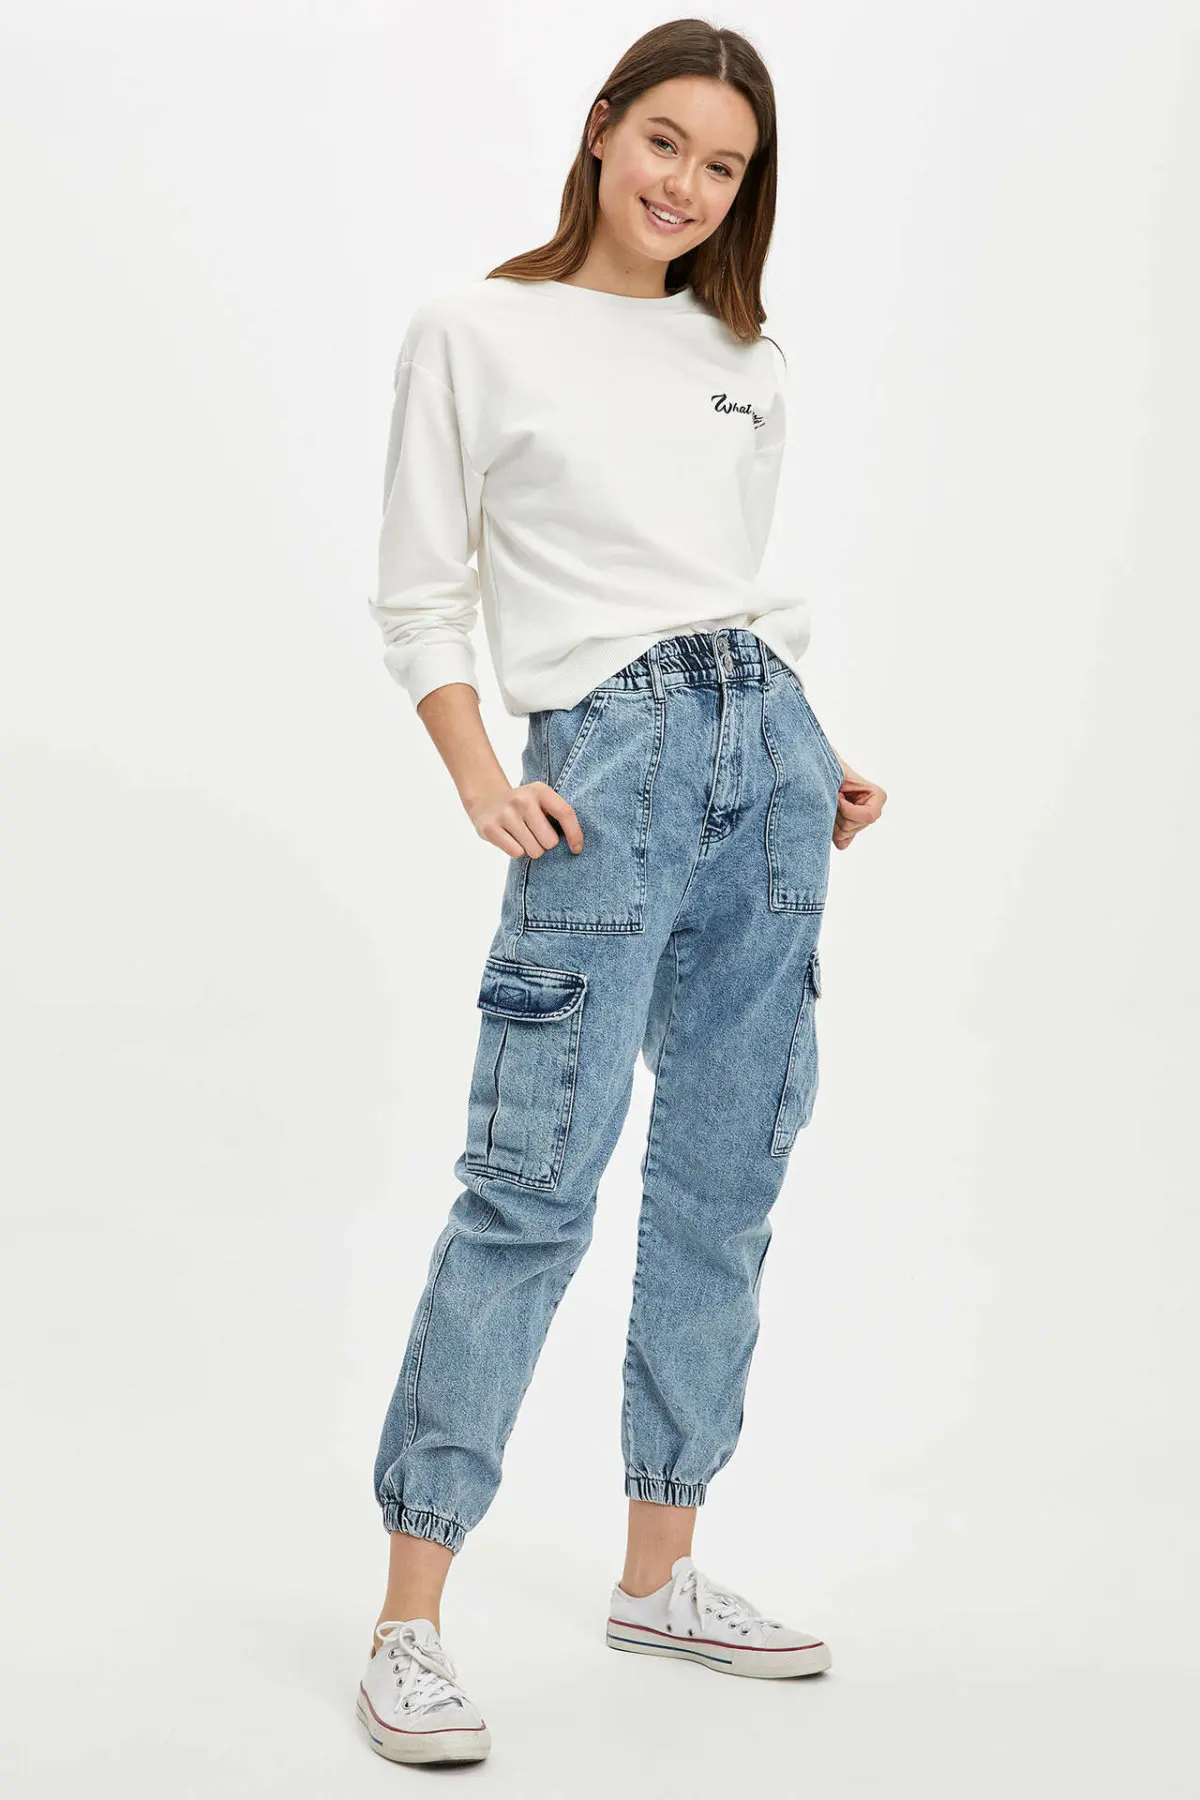 trendy denim jeans